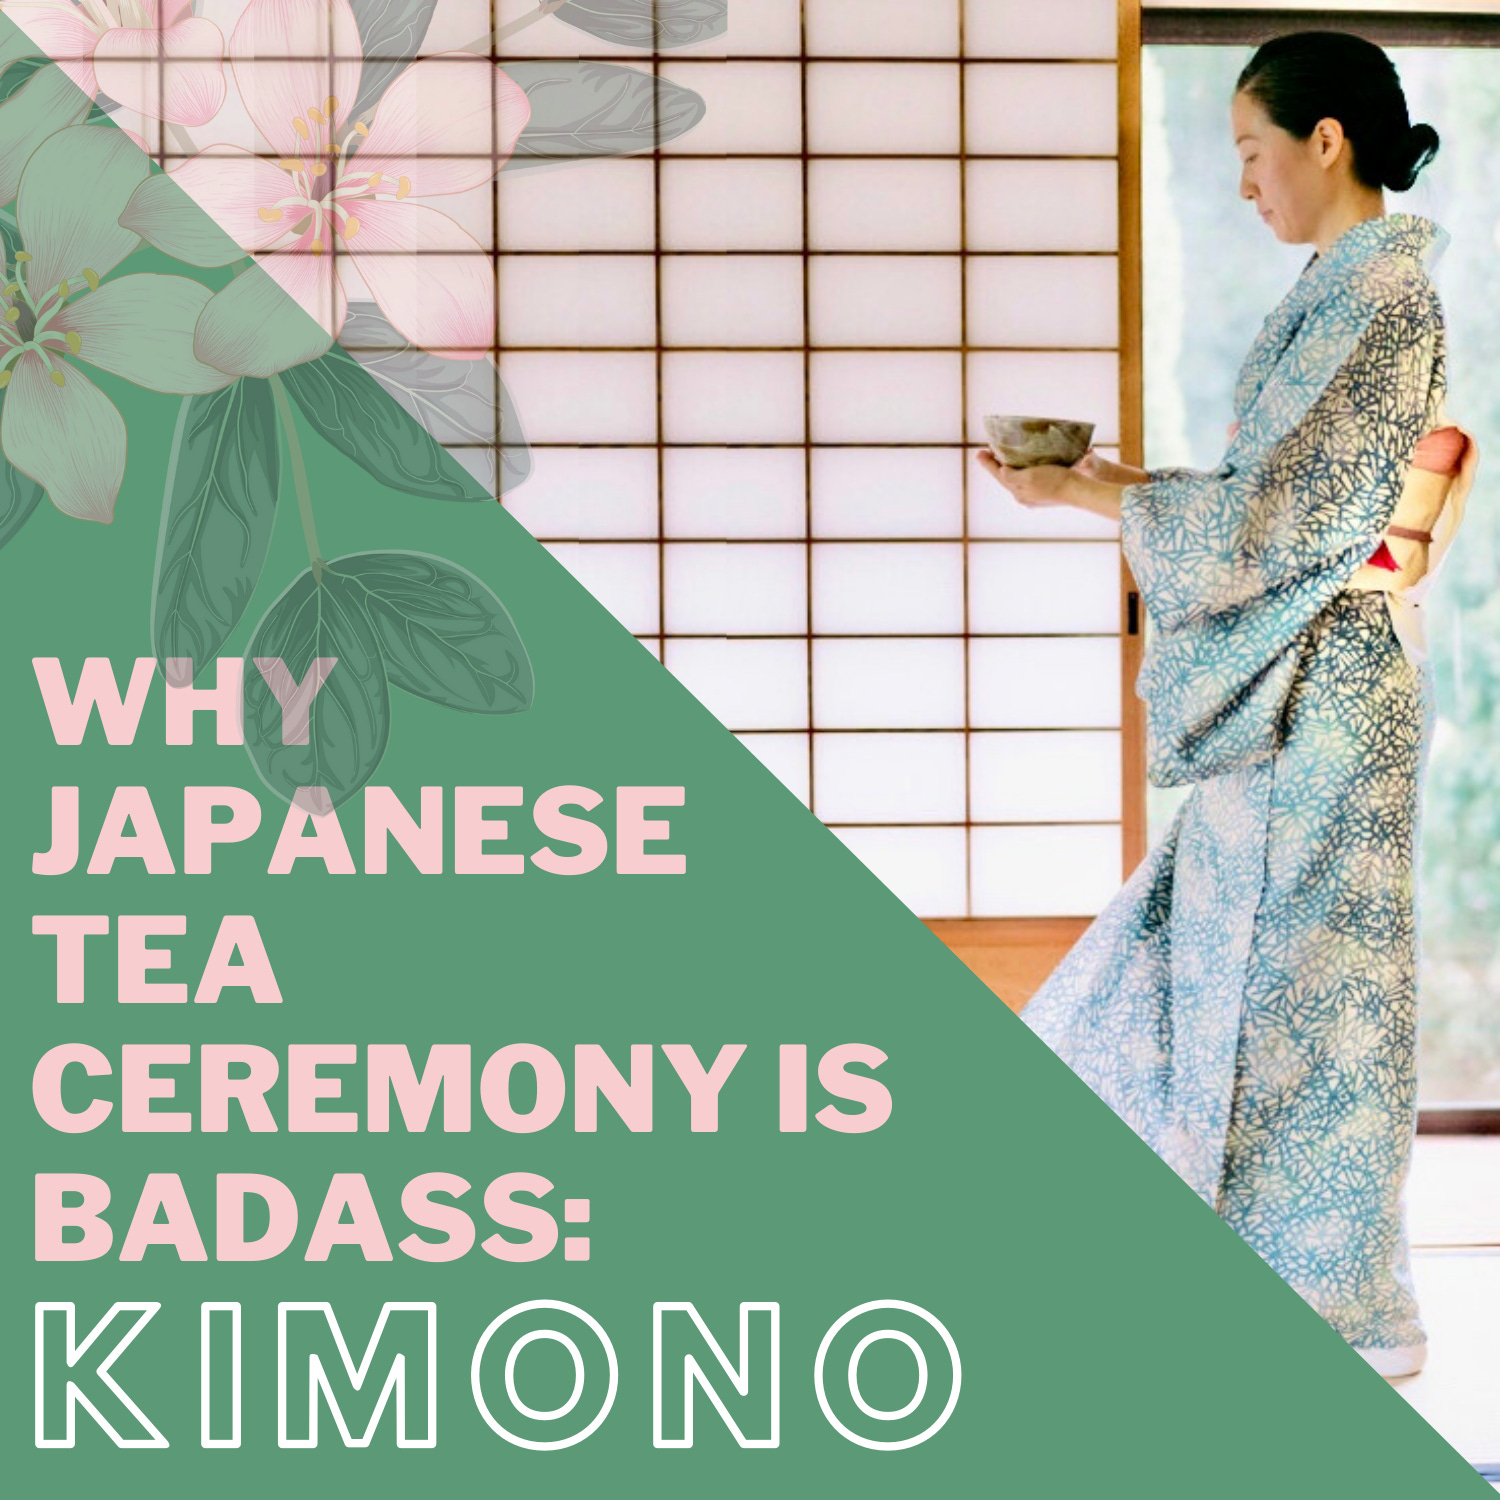 Japanese Women Share Stunning Photos In Their Kimonos After Kim